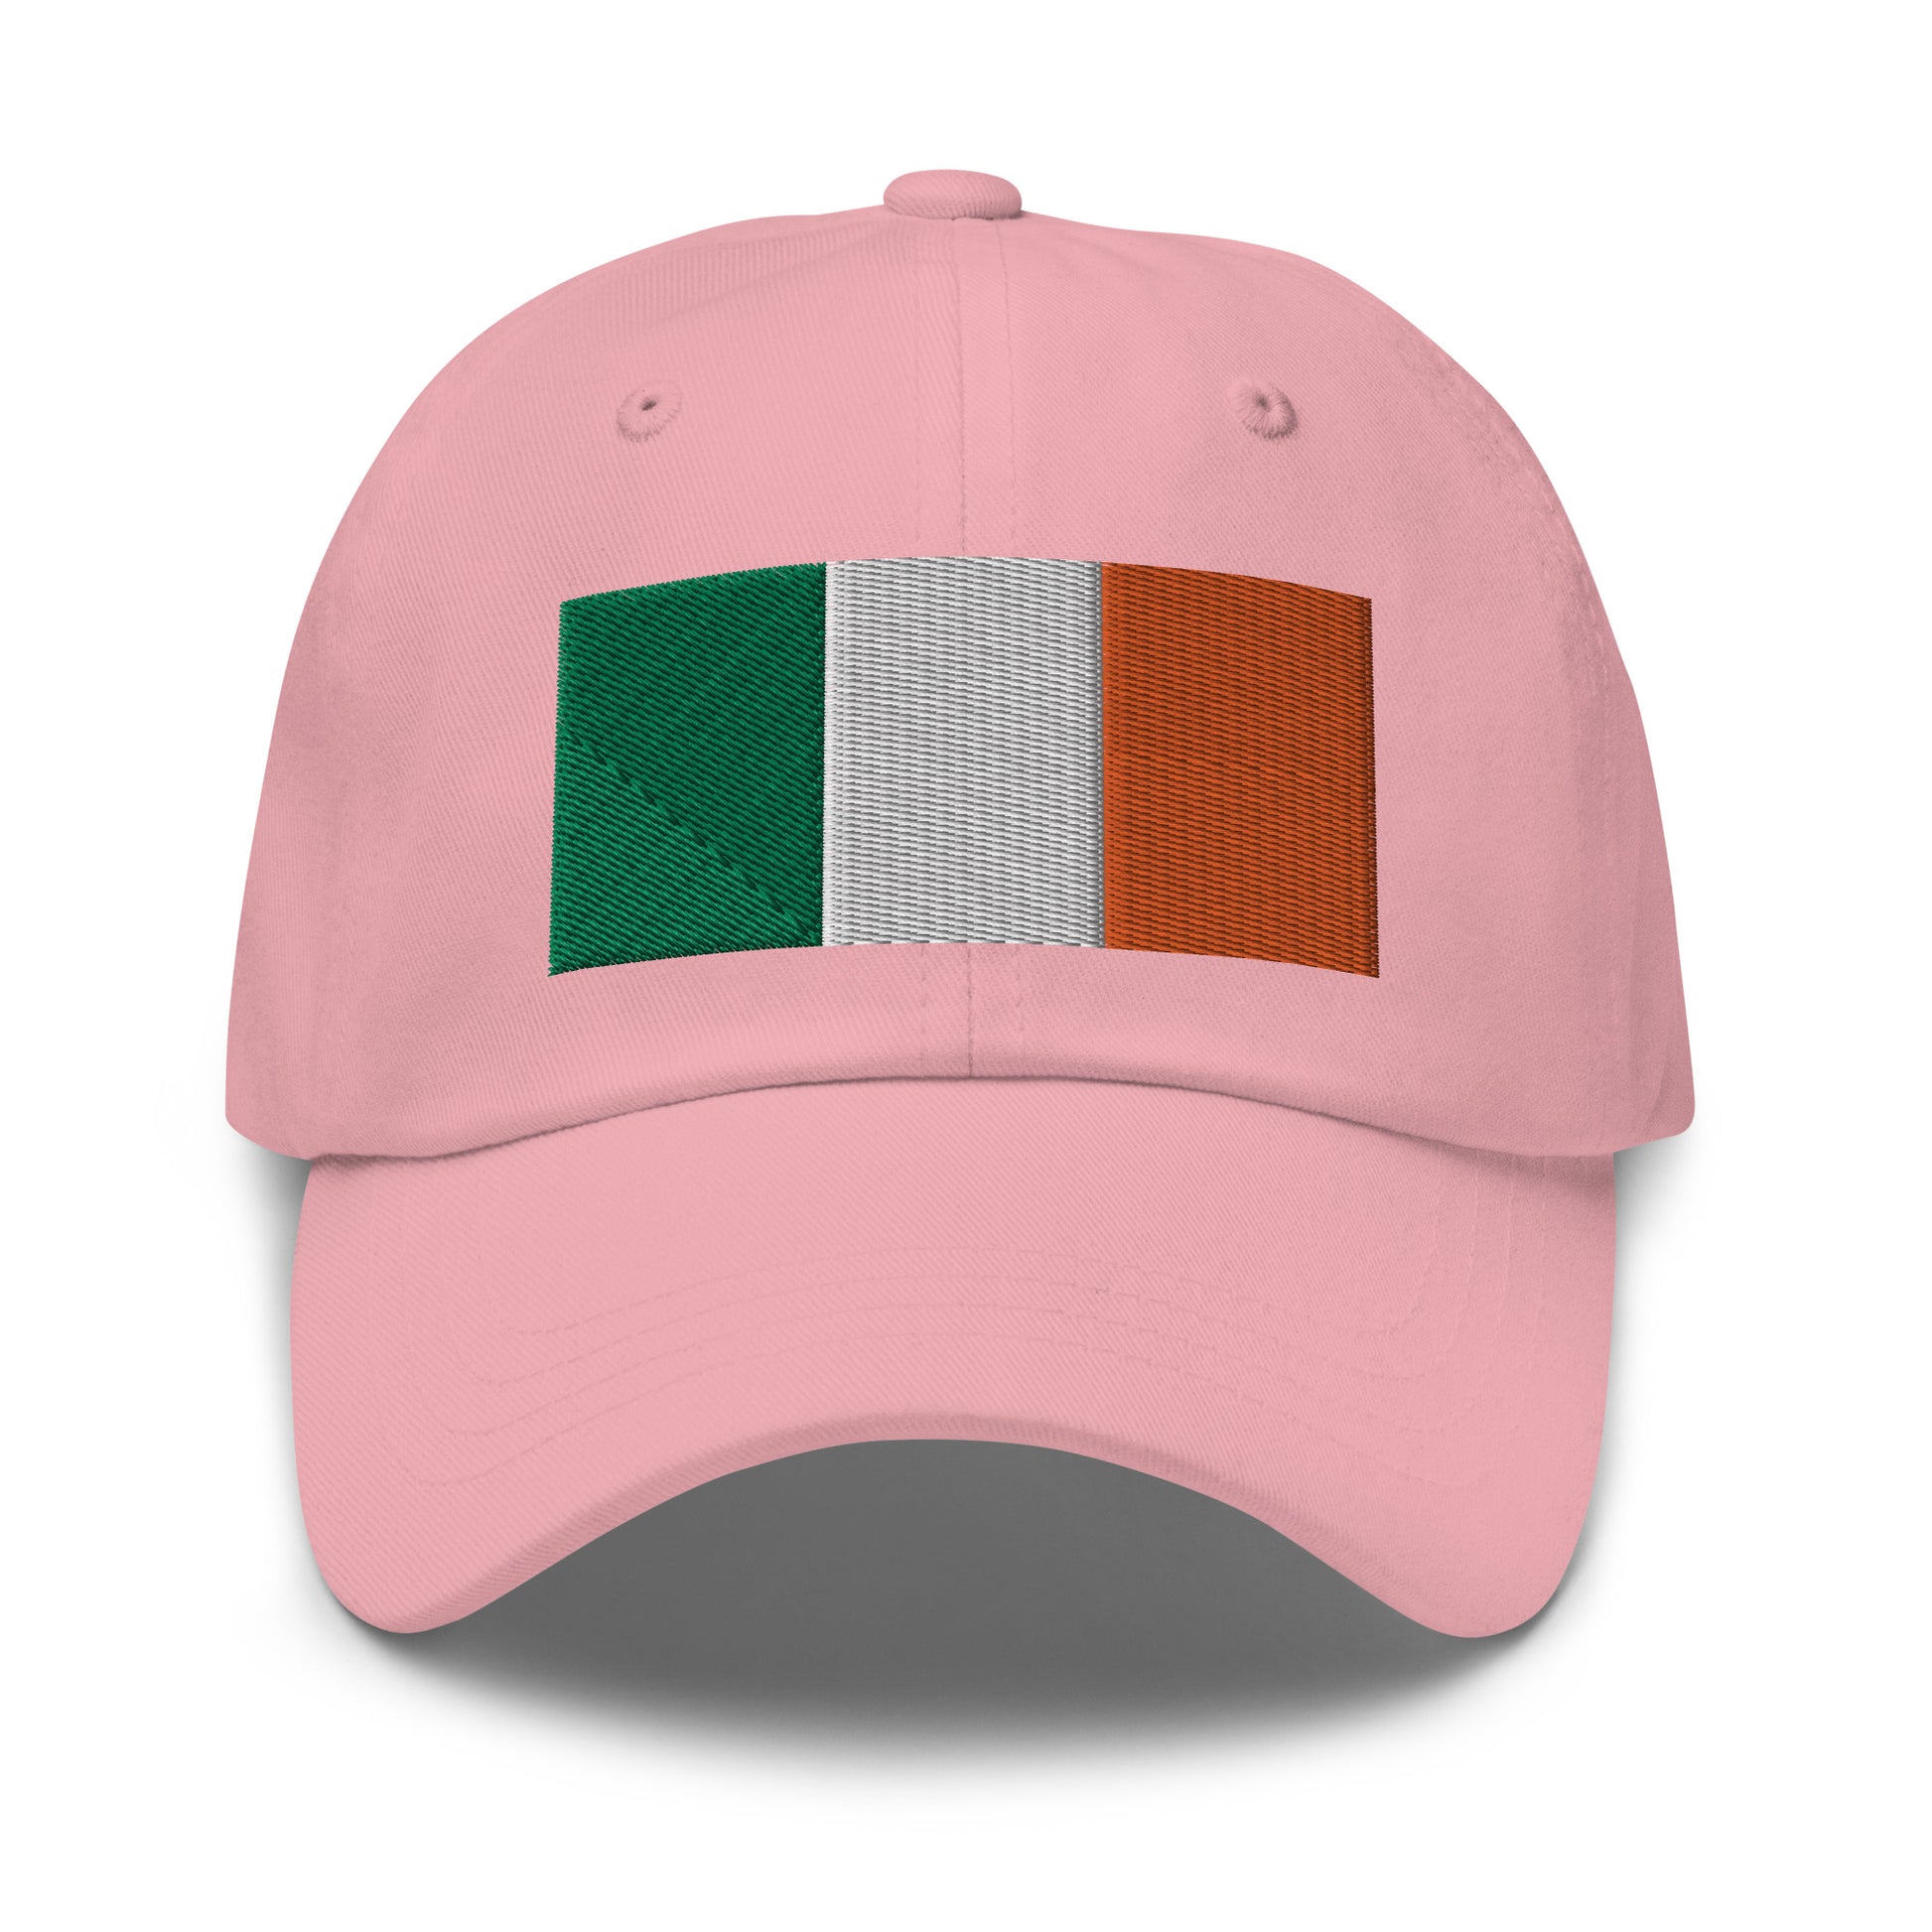 Embroidered Irish Flag Dad Hat with Adjustable Closure